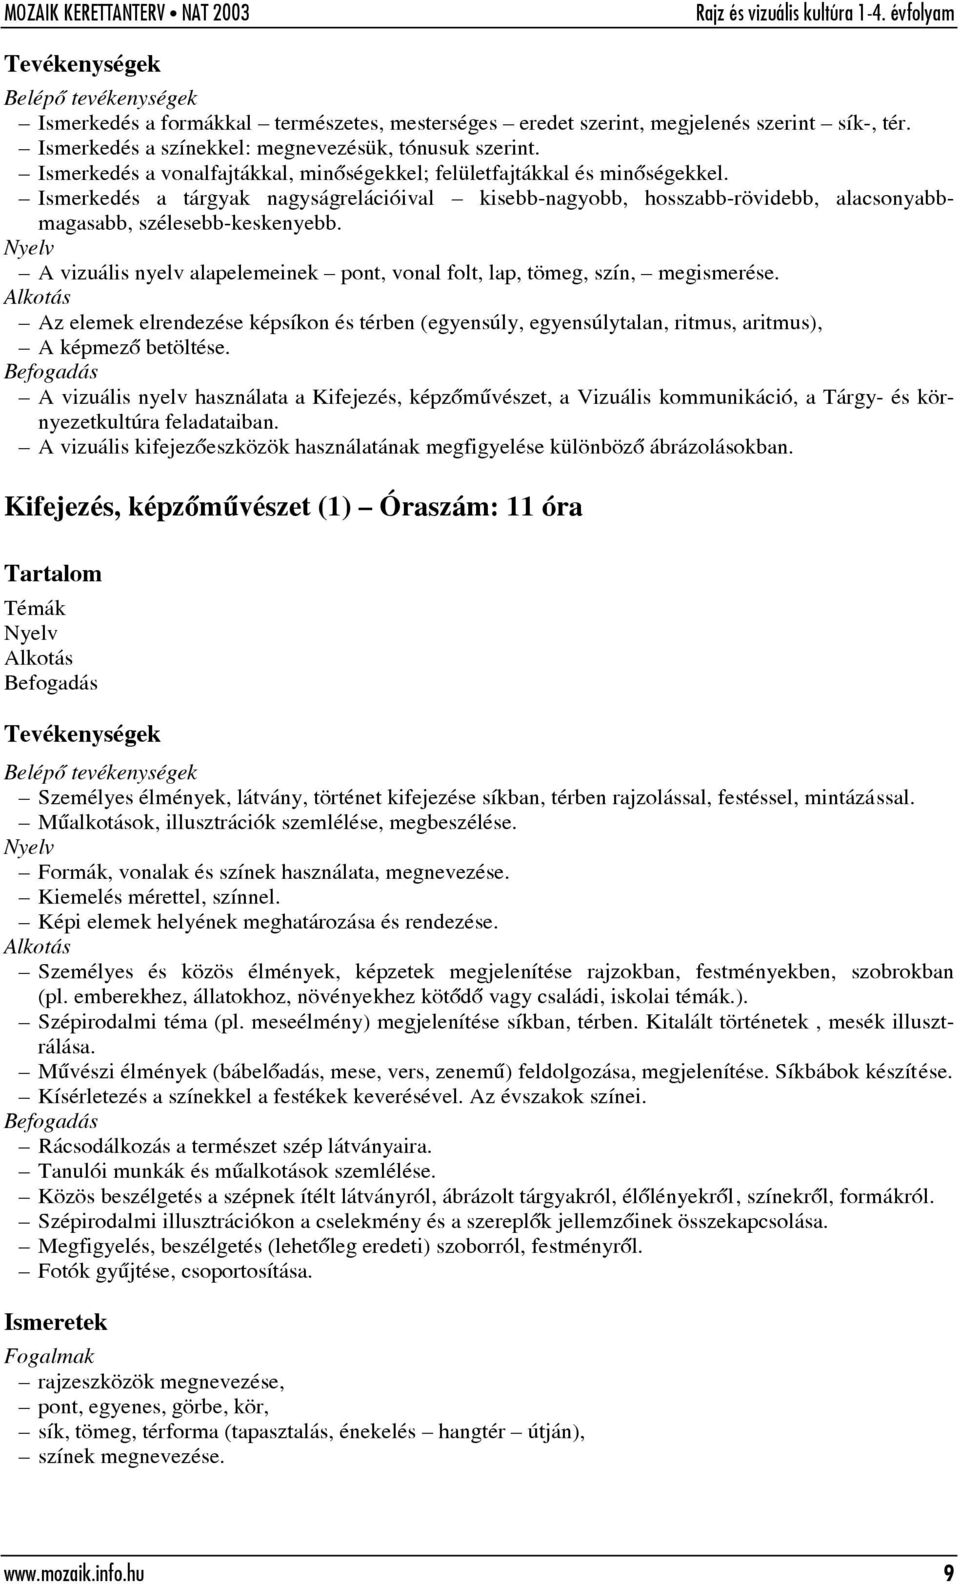 RAJZ ÉS VIZUÁLIS KULTÚRA - PDF Free Download